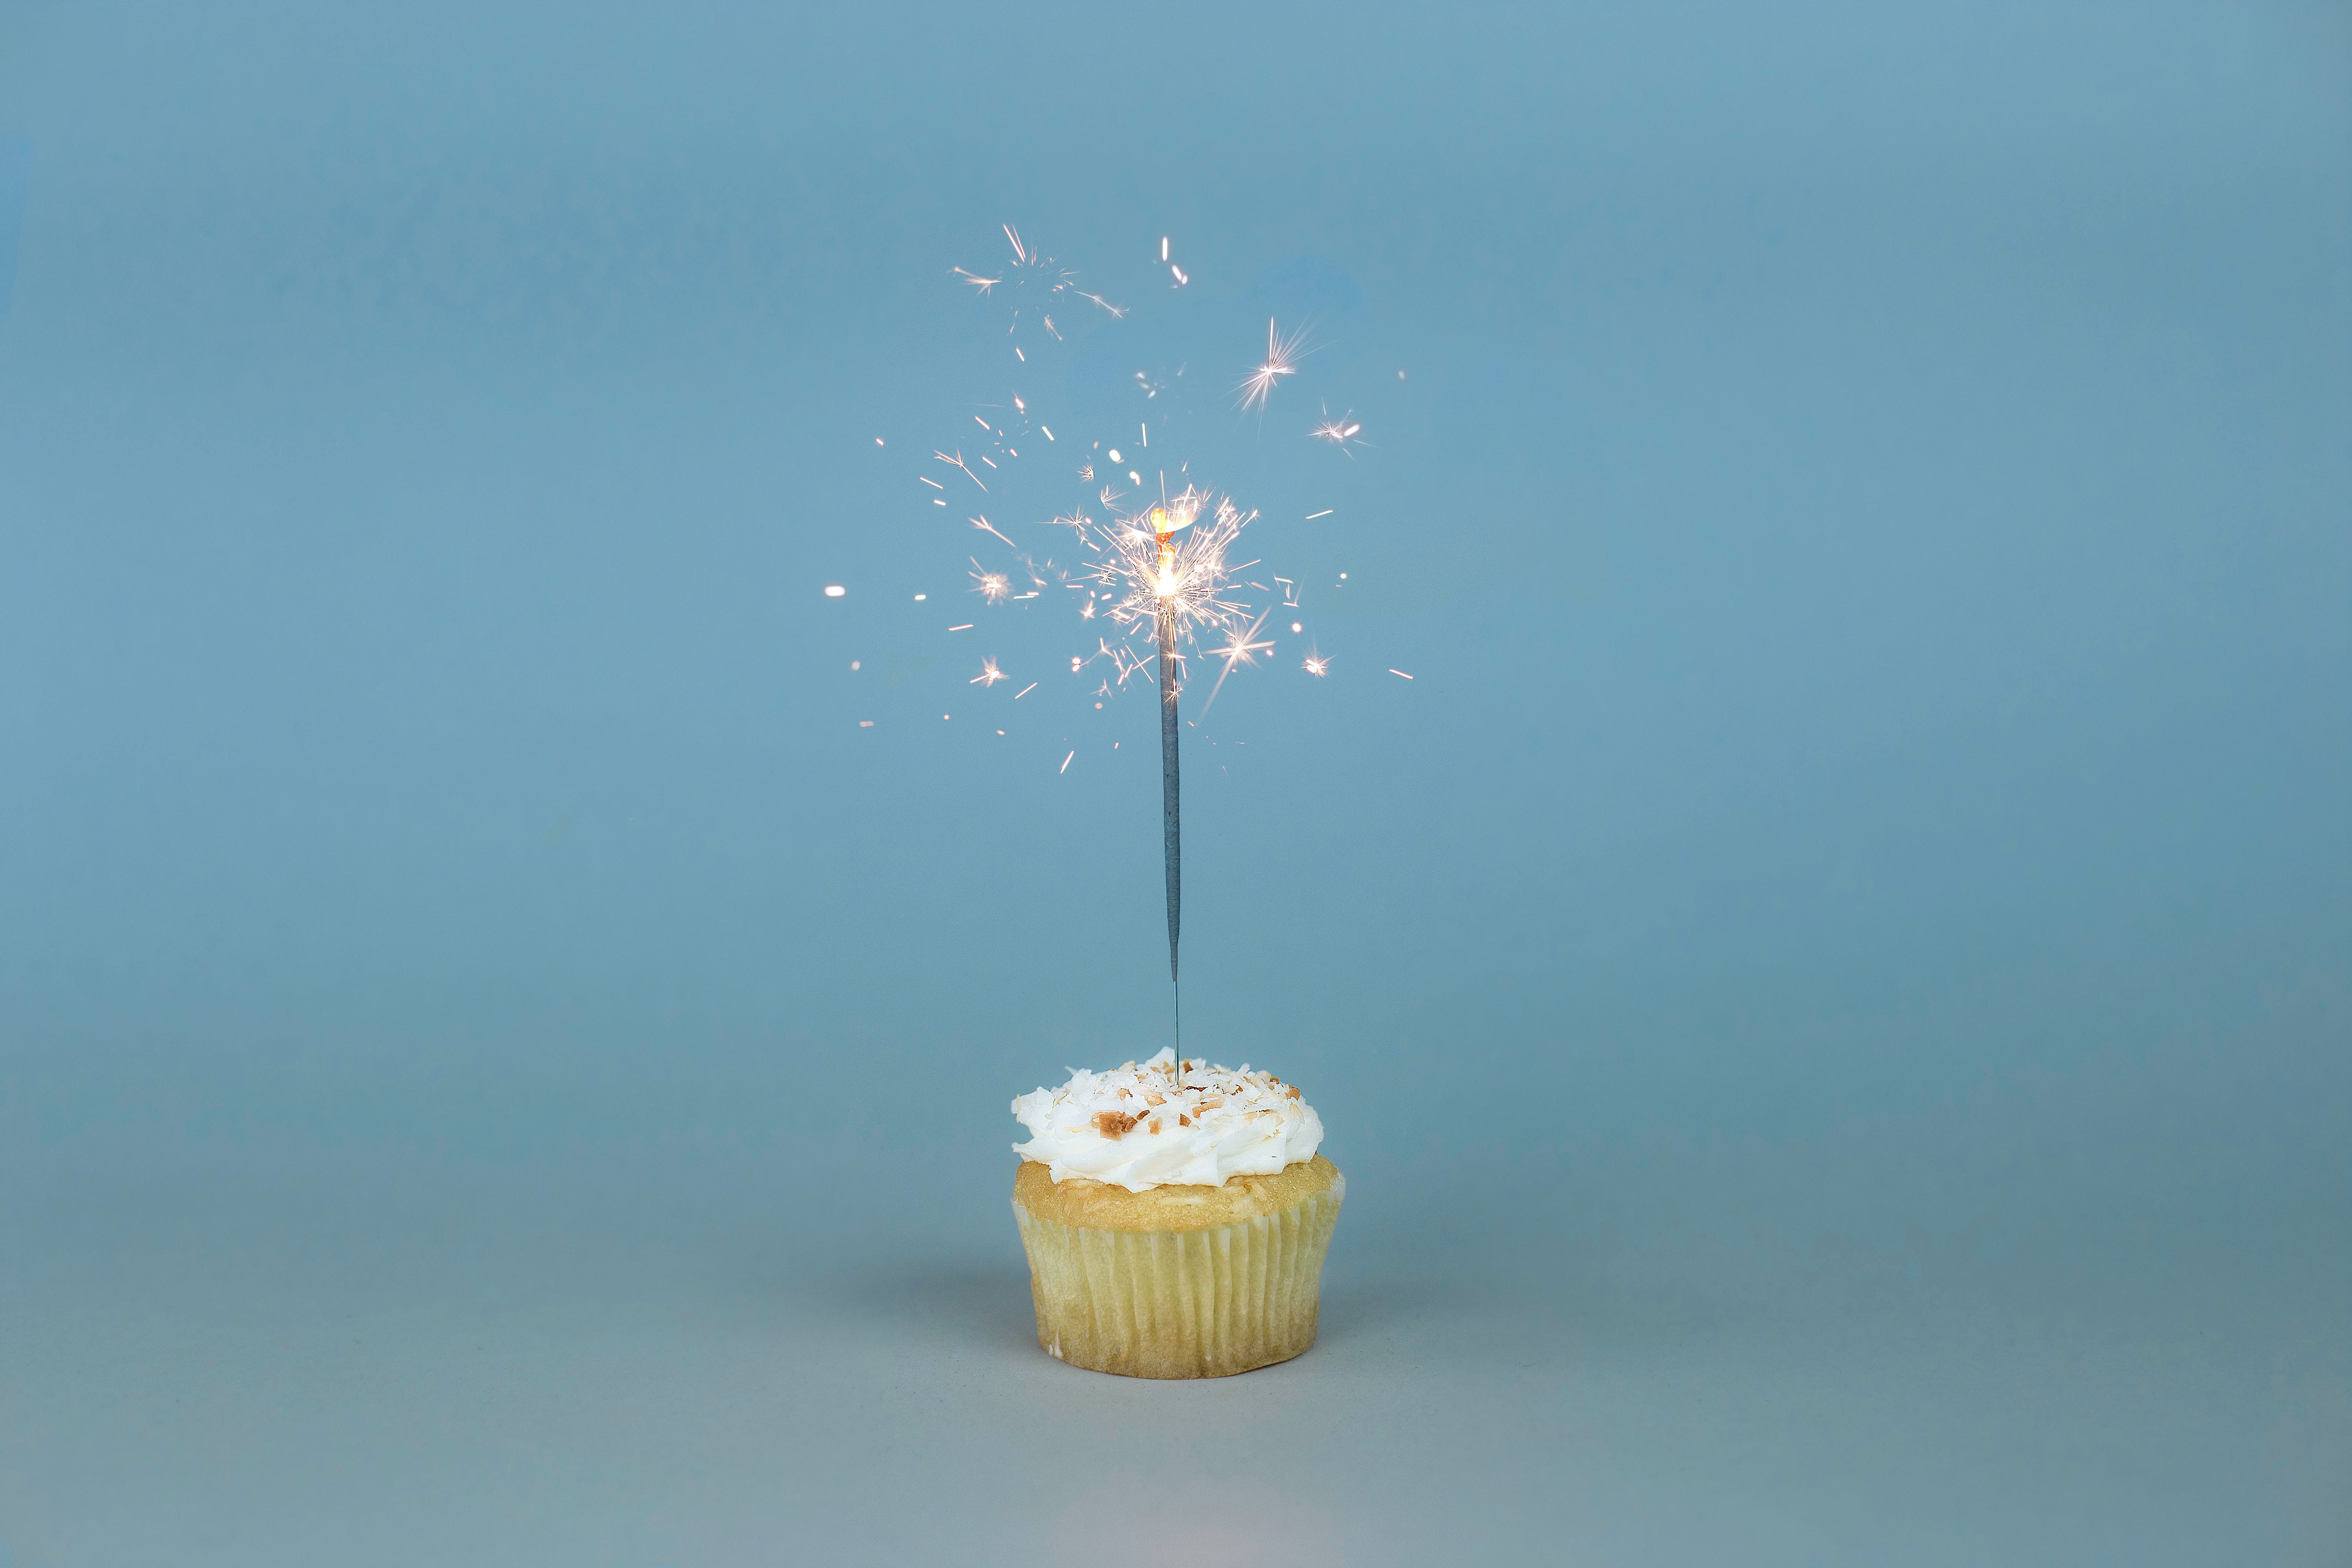 A Cake with Sparkles by [Audrey Fretz](https://unsplash.com/@parkstreet?utm_source=medium&utm_medium=referral) on [Unsplash](https://unsplash.com?utm_source=medium&utm_medium=referral)